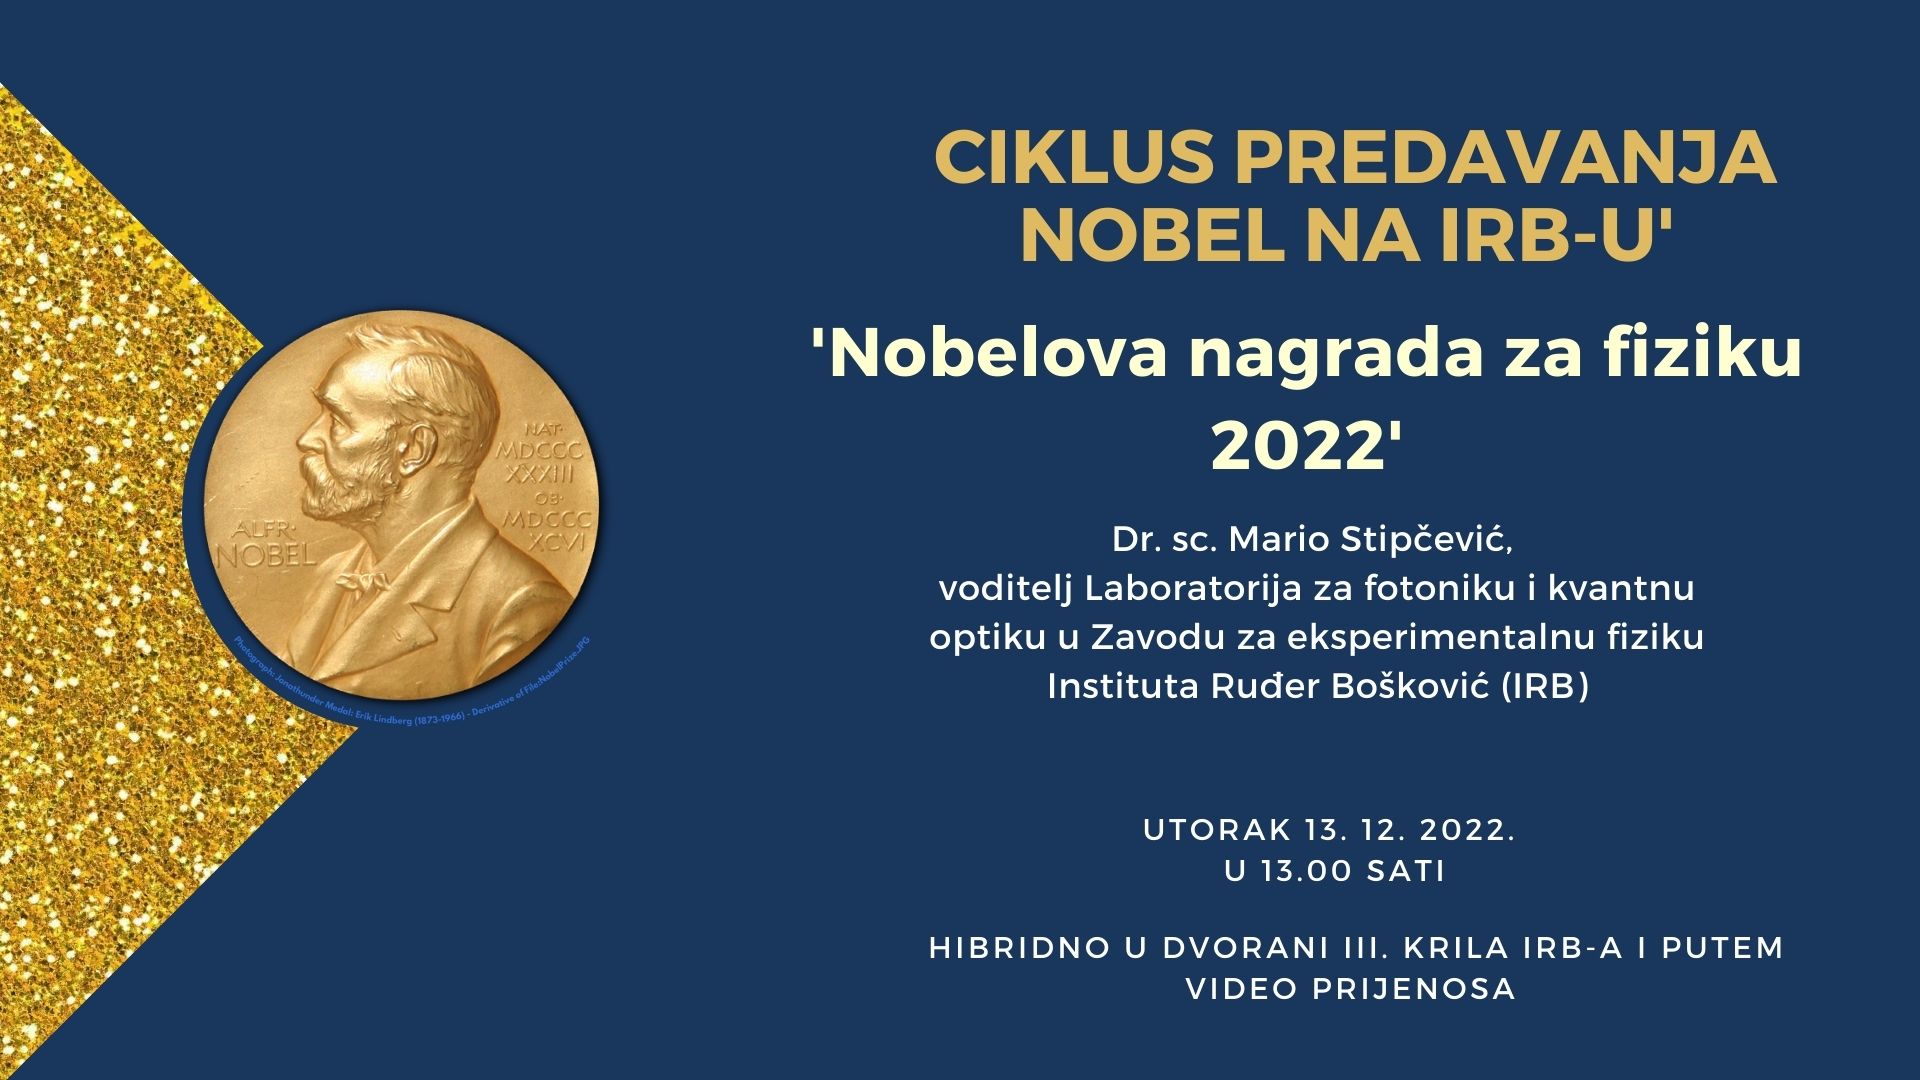 Nobel na IRB-u: "Nobelova nagrada za fiziku 2022. godine"